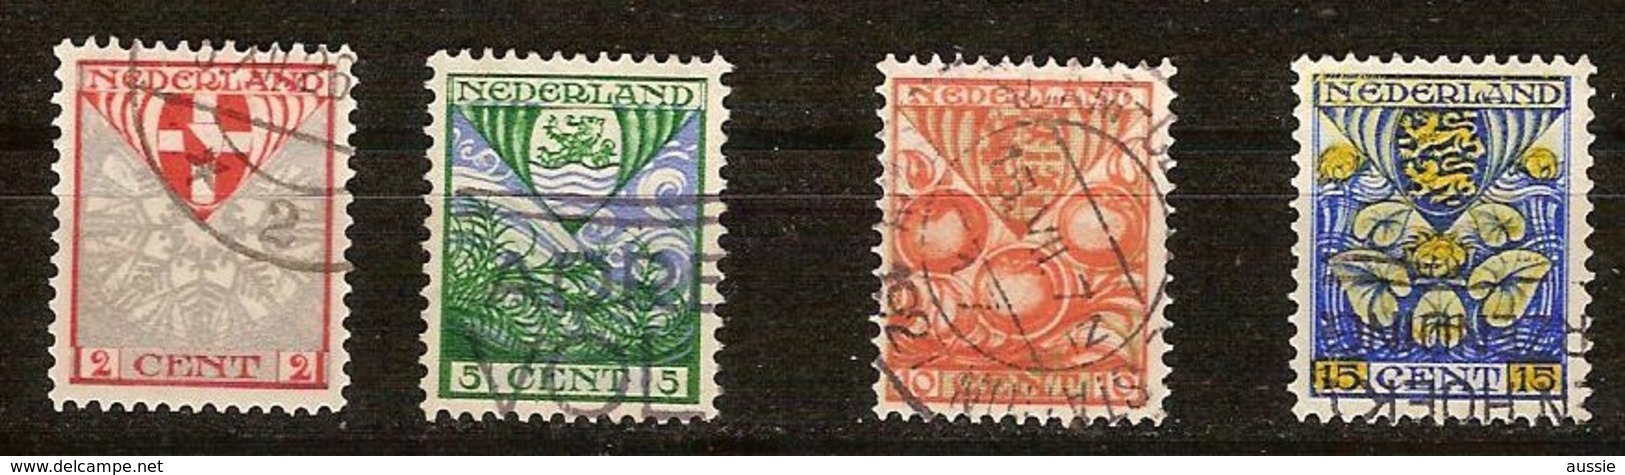 Pays-Bas Nederland 1926 Yvertn° 186-189 (°) Oblitéré Used Cote 11,00 Euro - Usados